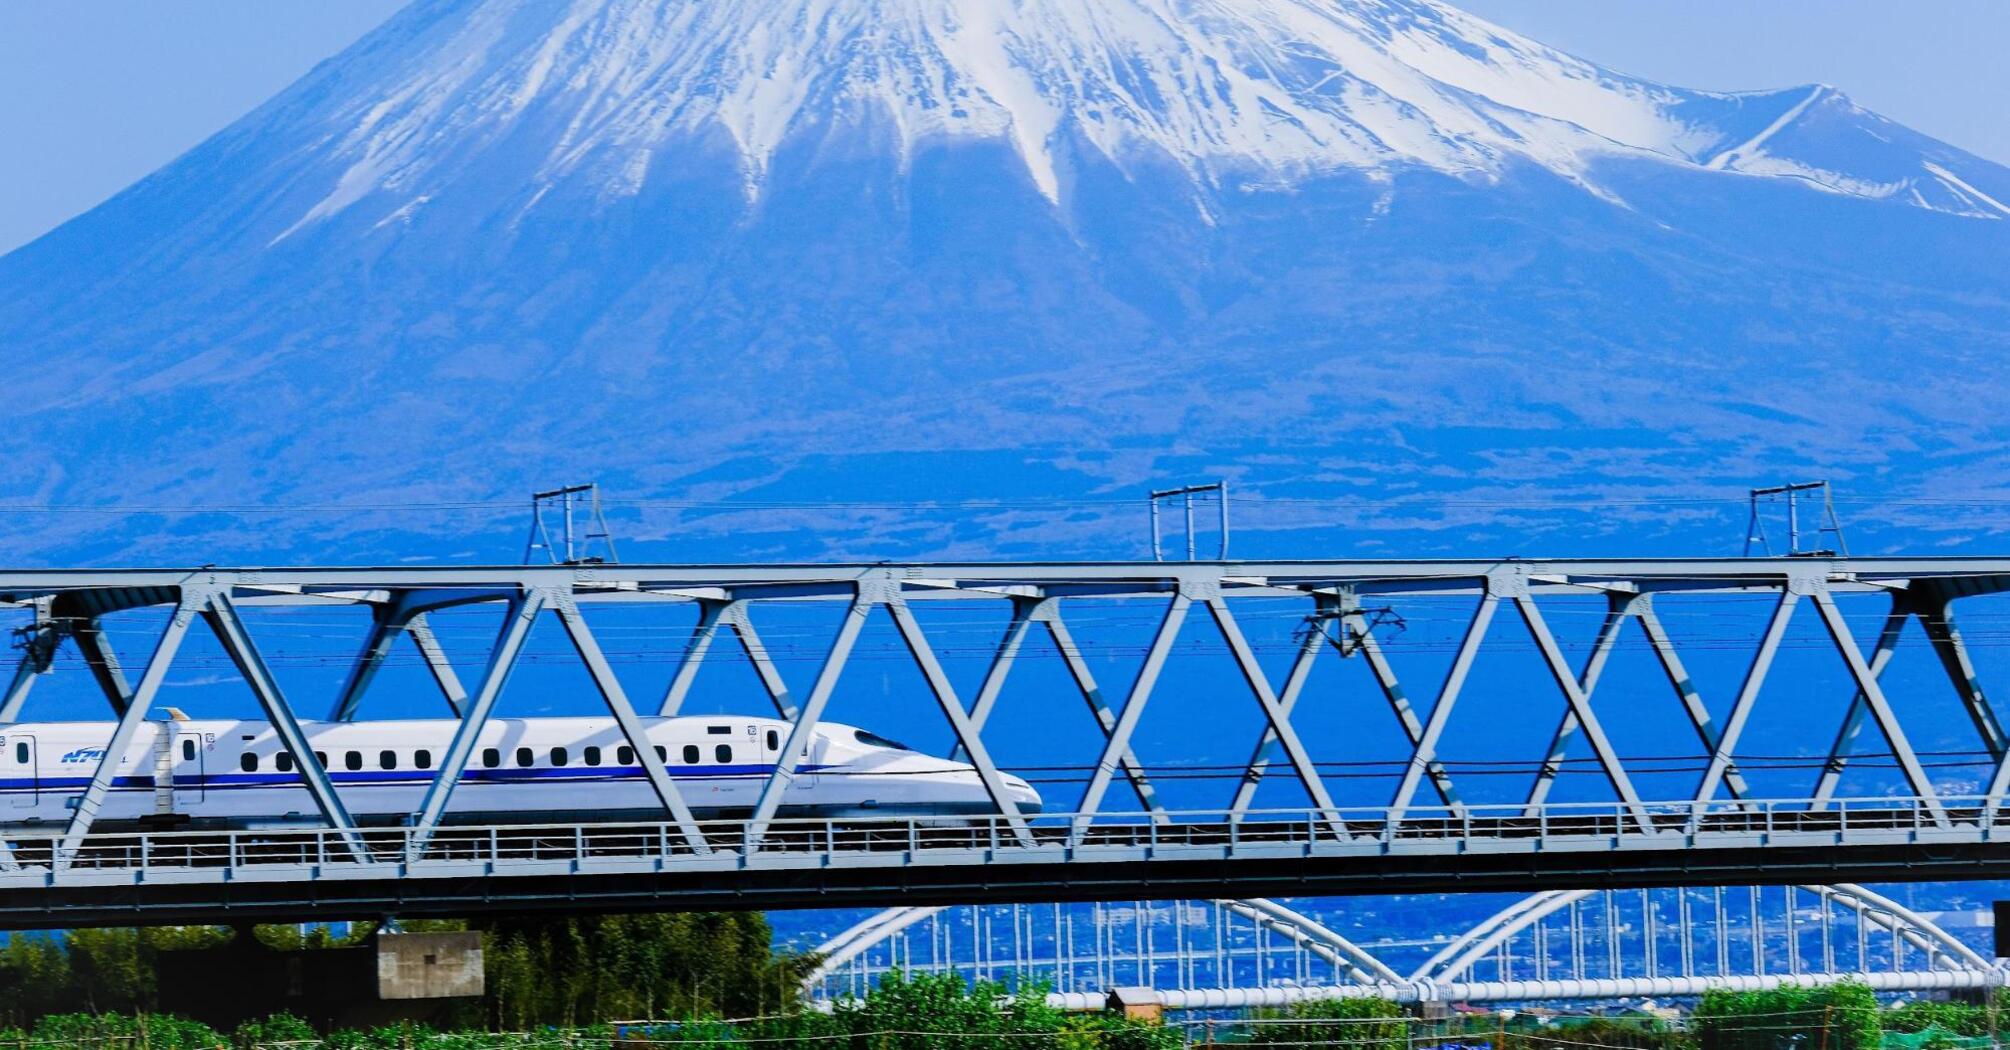 High-speed train on the bridge near the mountains